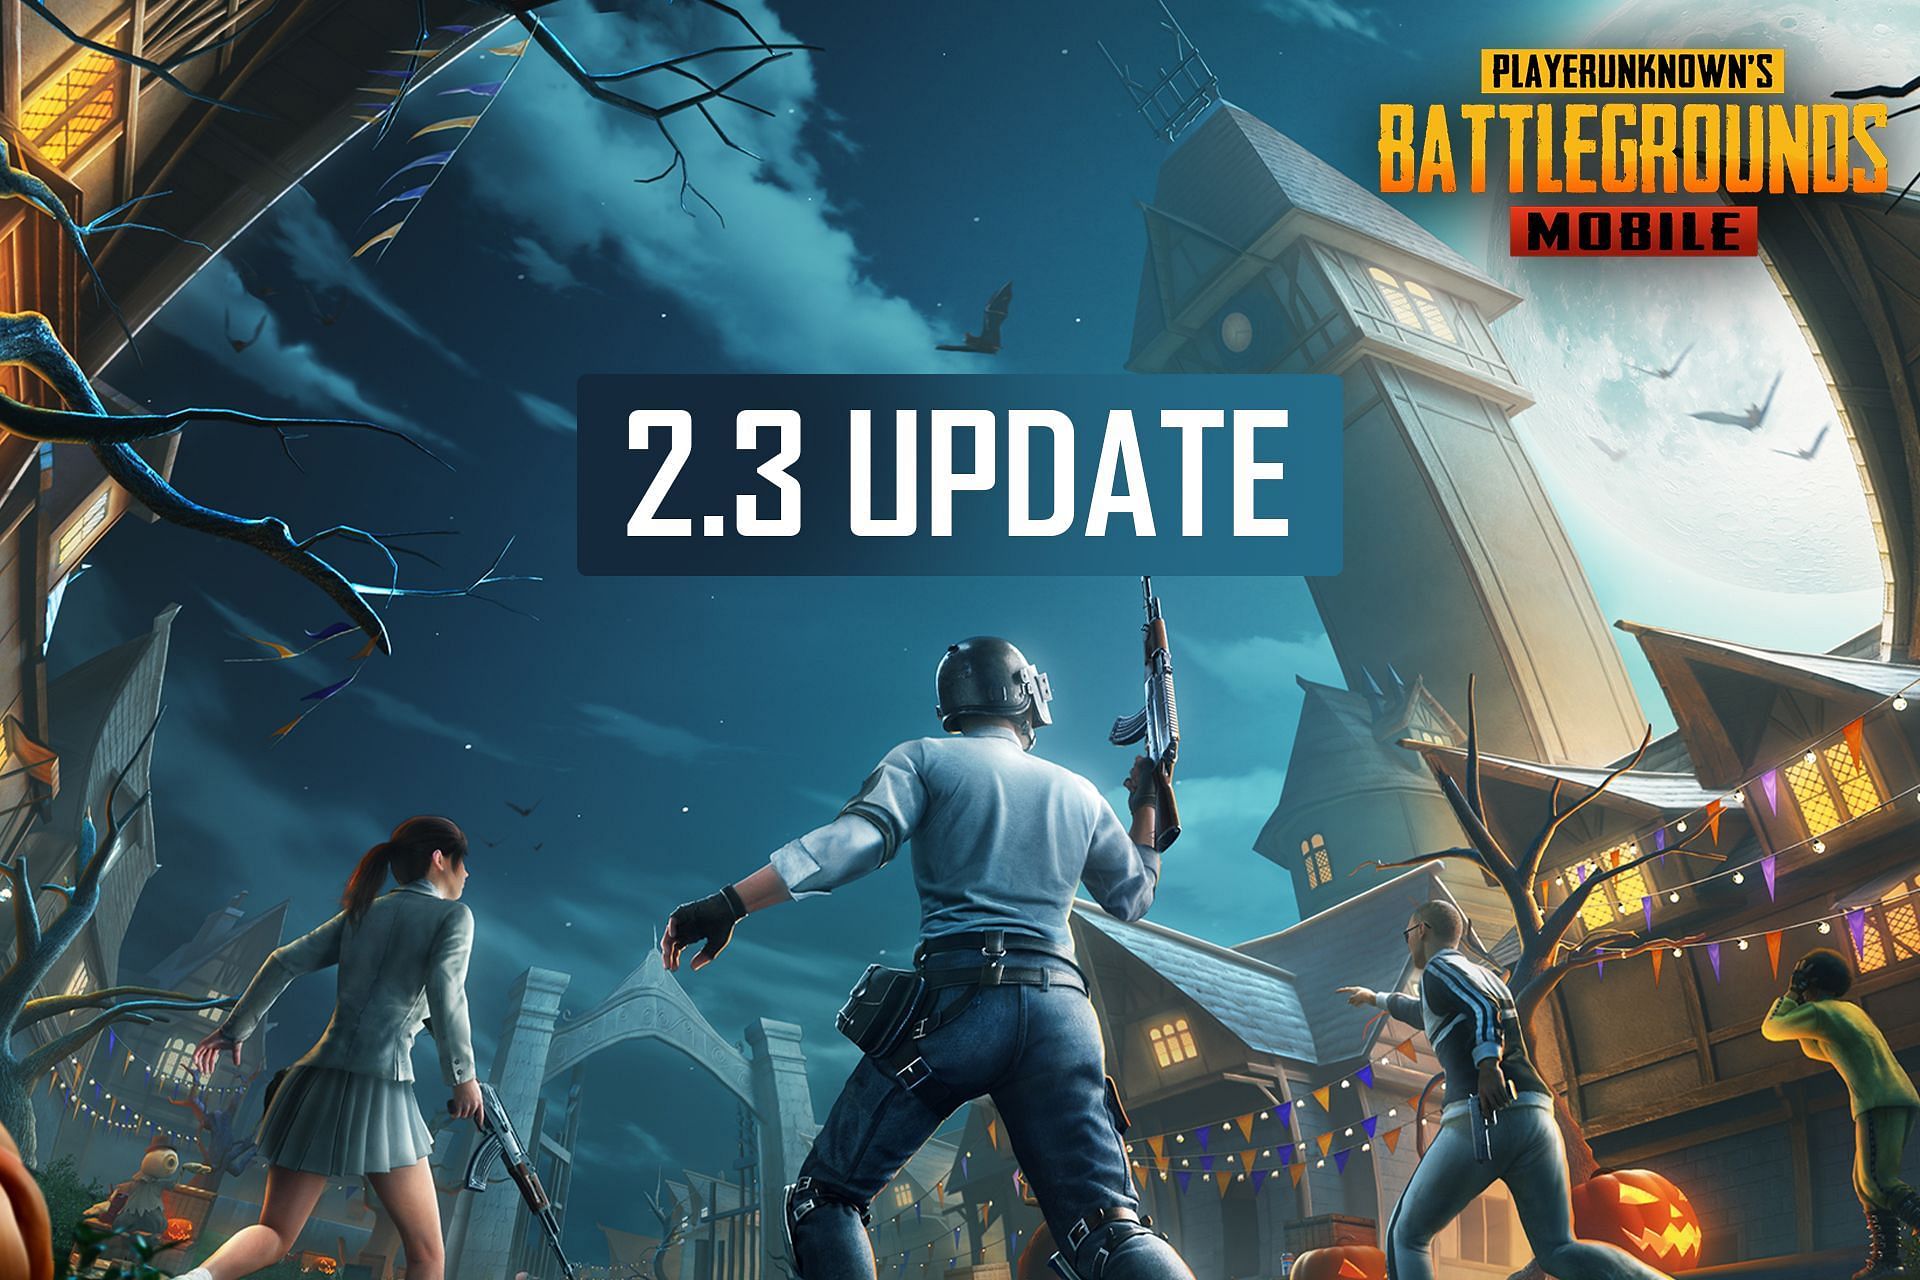 The 2.2 update